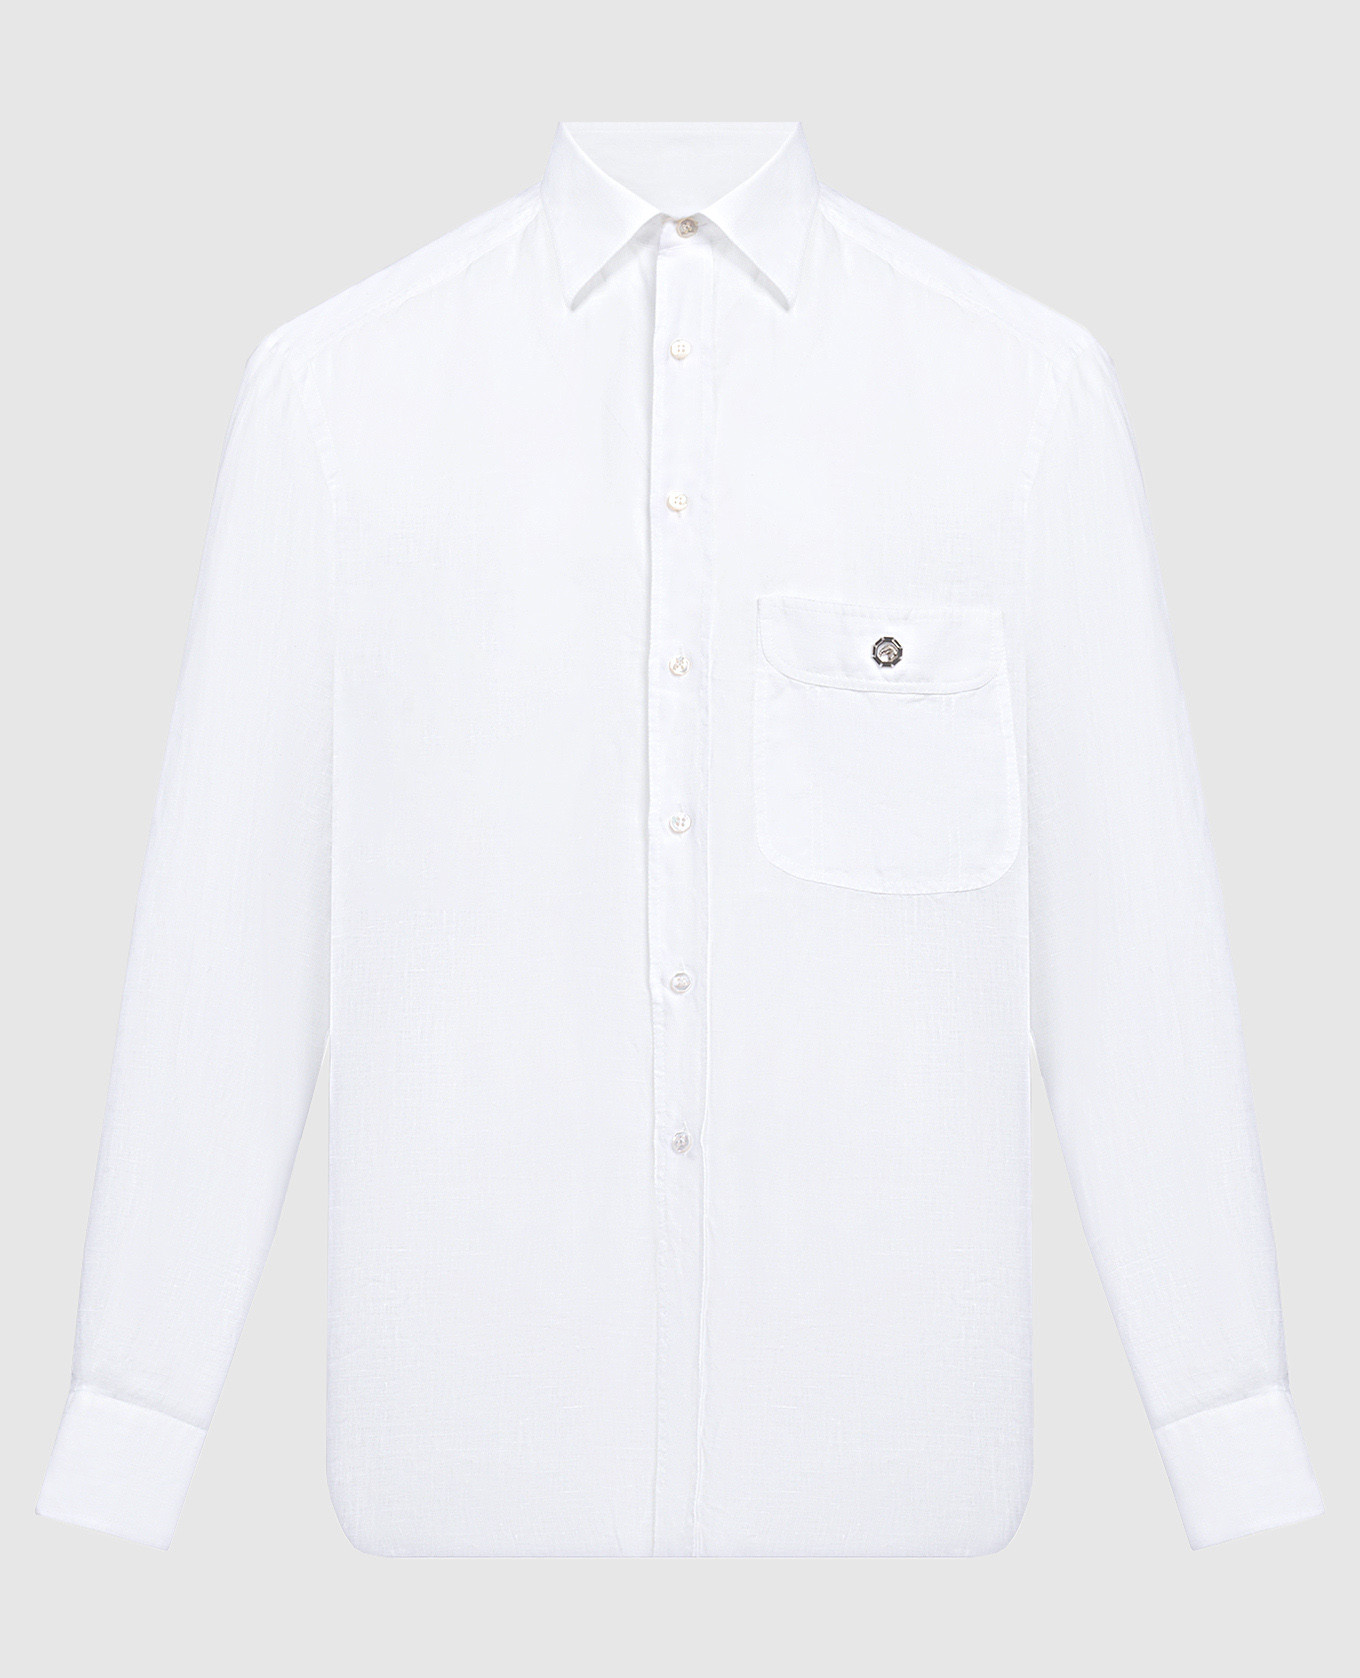 White linen shirt with metallic logo